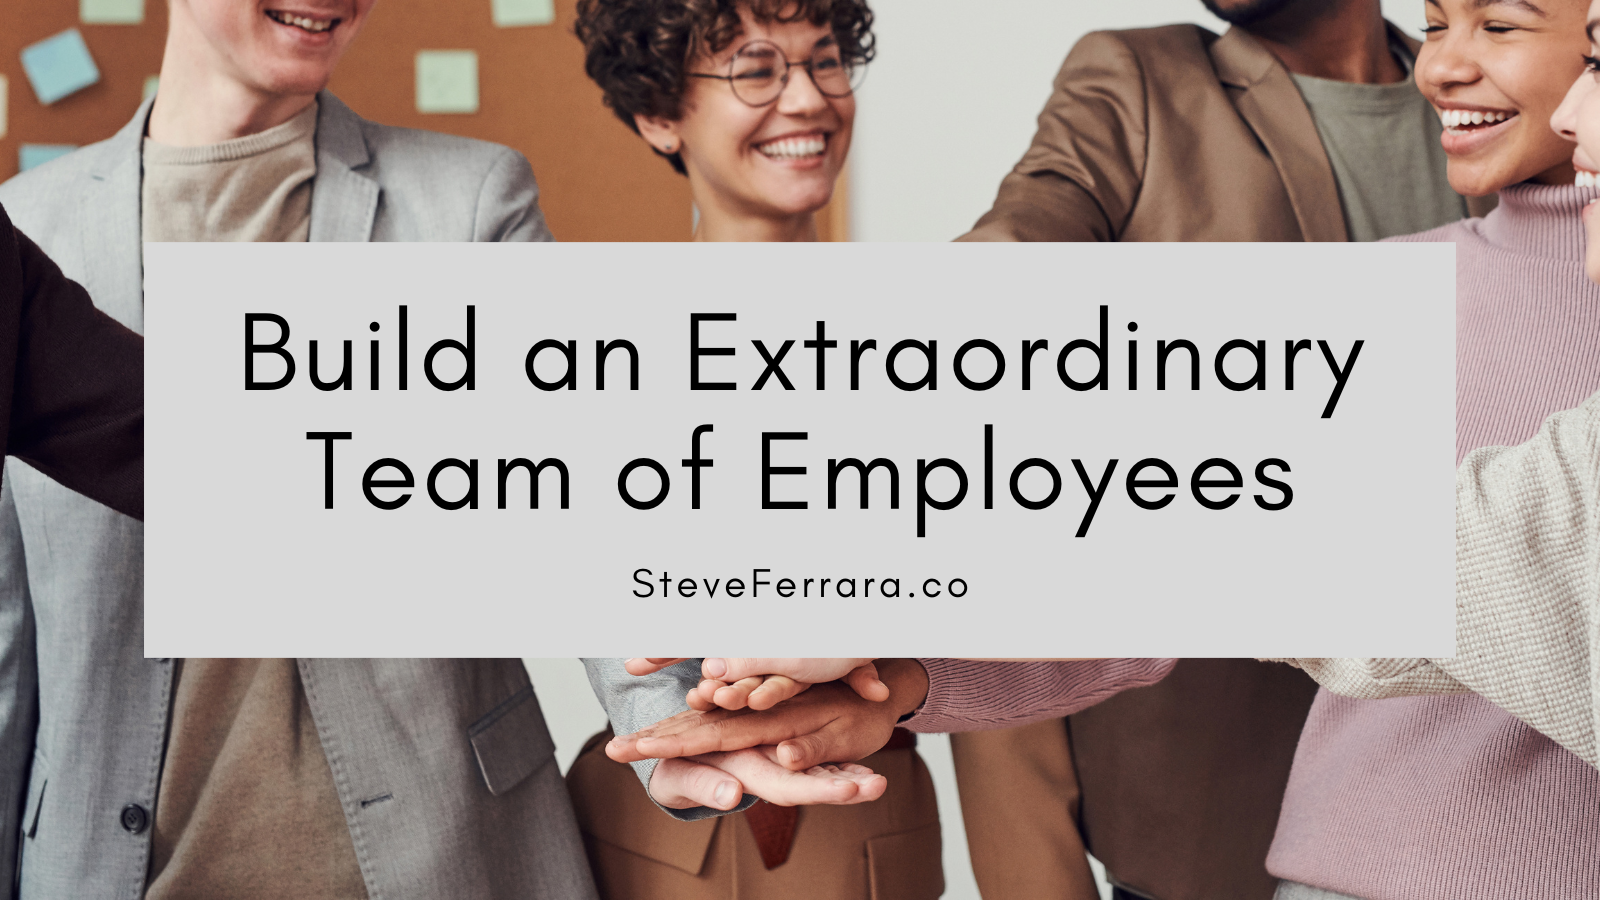 Build an Extraordinary
Team of Employees

SteveFerrara.co